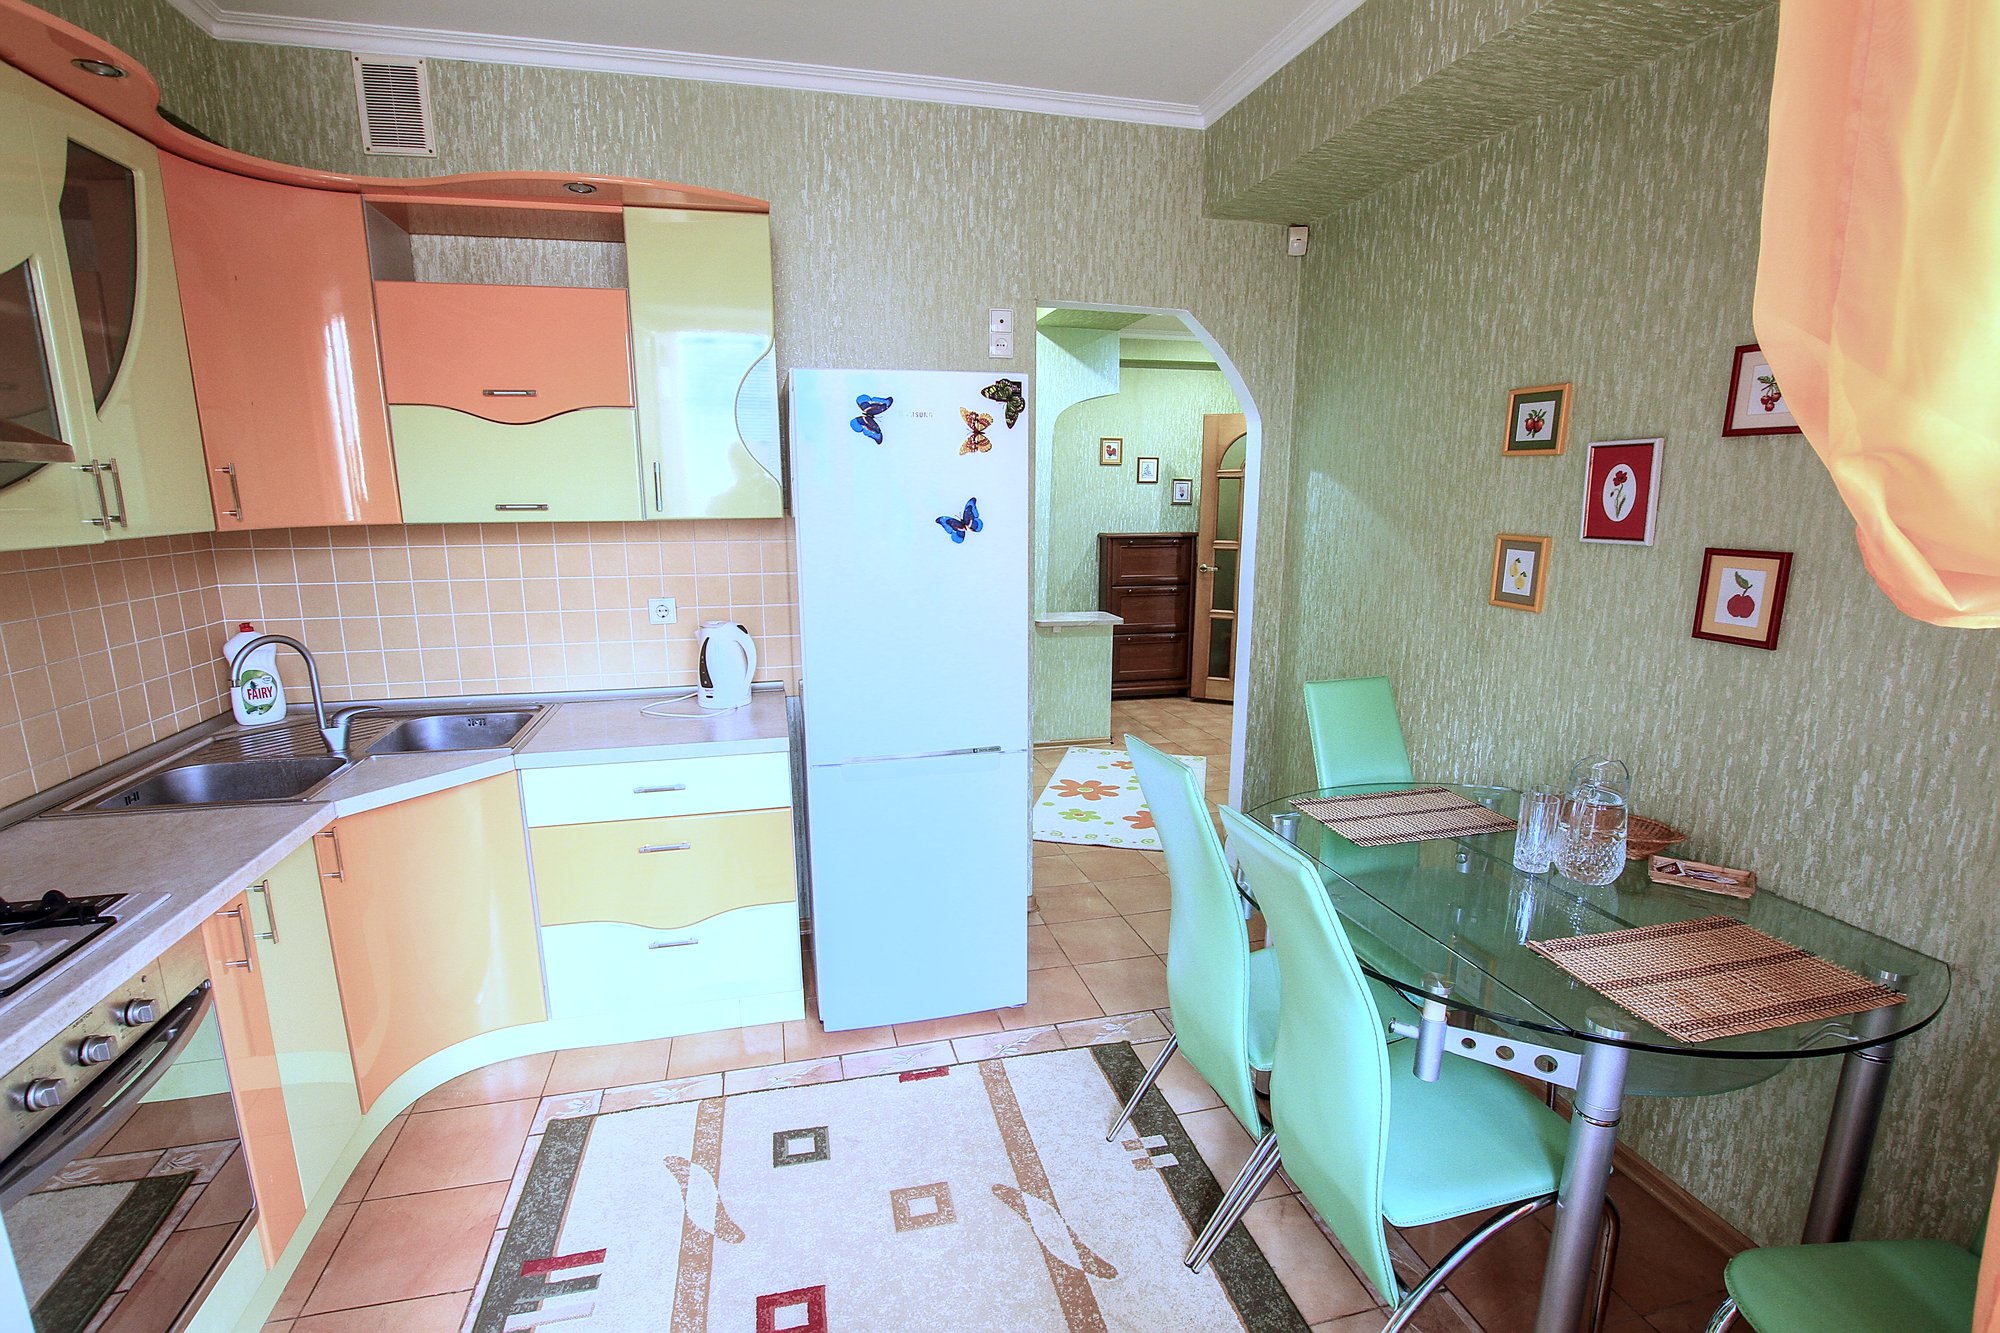 Anestiade Studio is a 1 room apartment for rent in Chisinau, Moldova